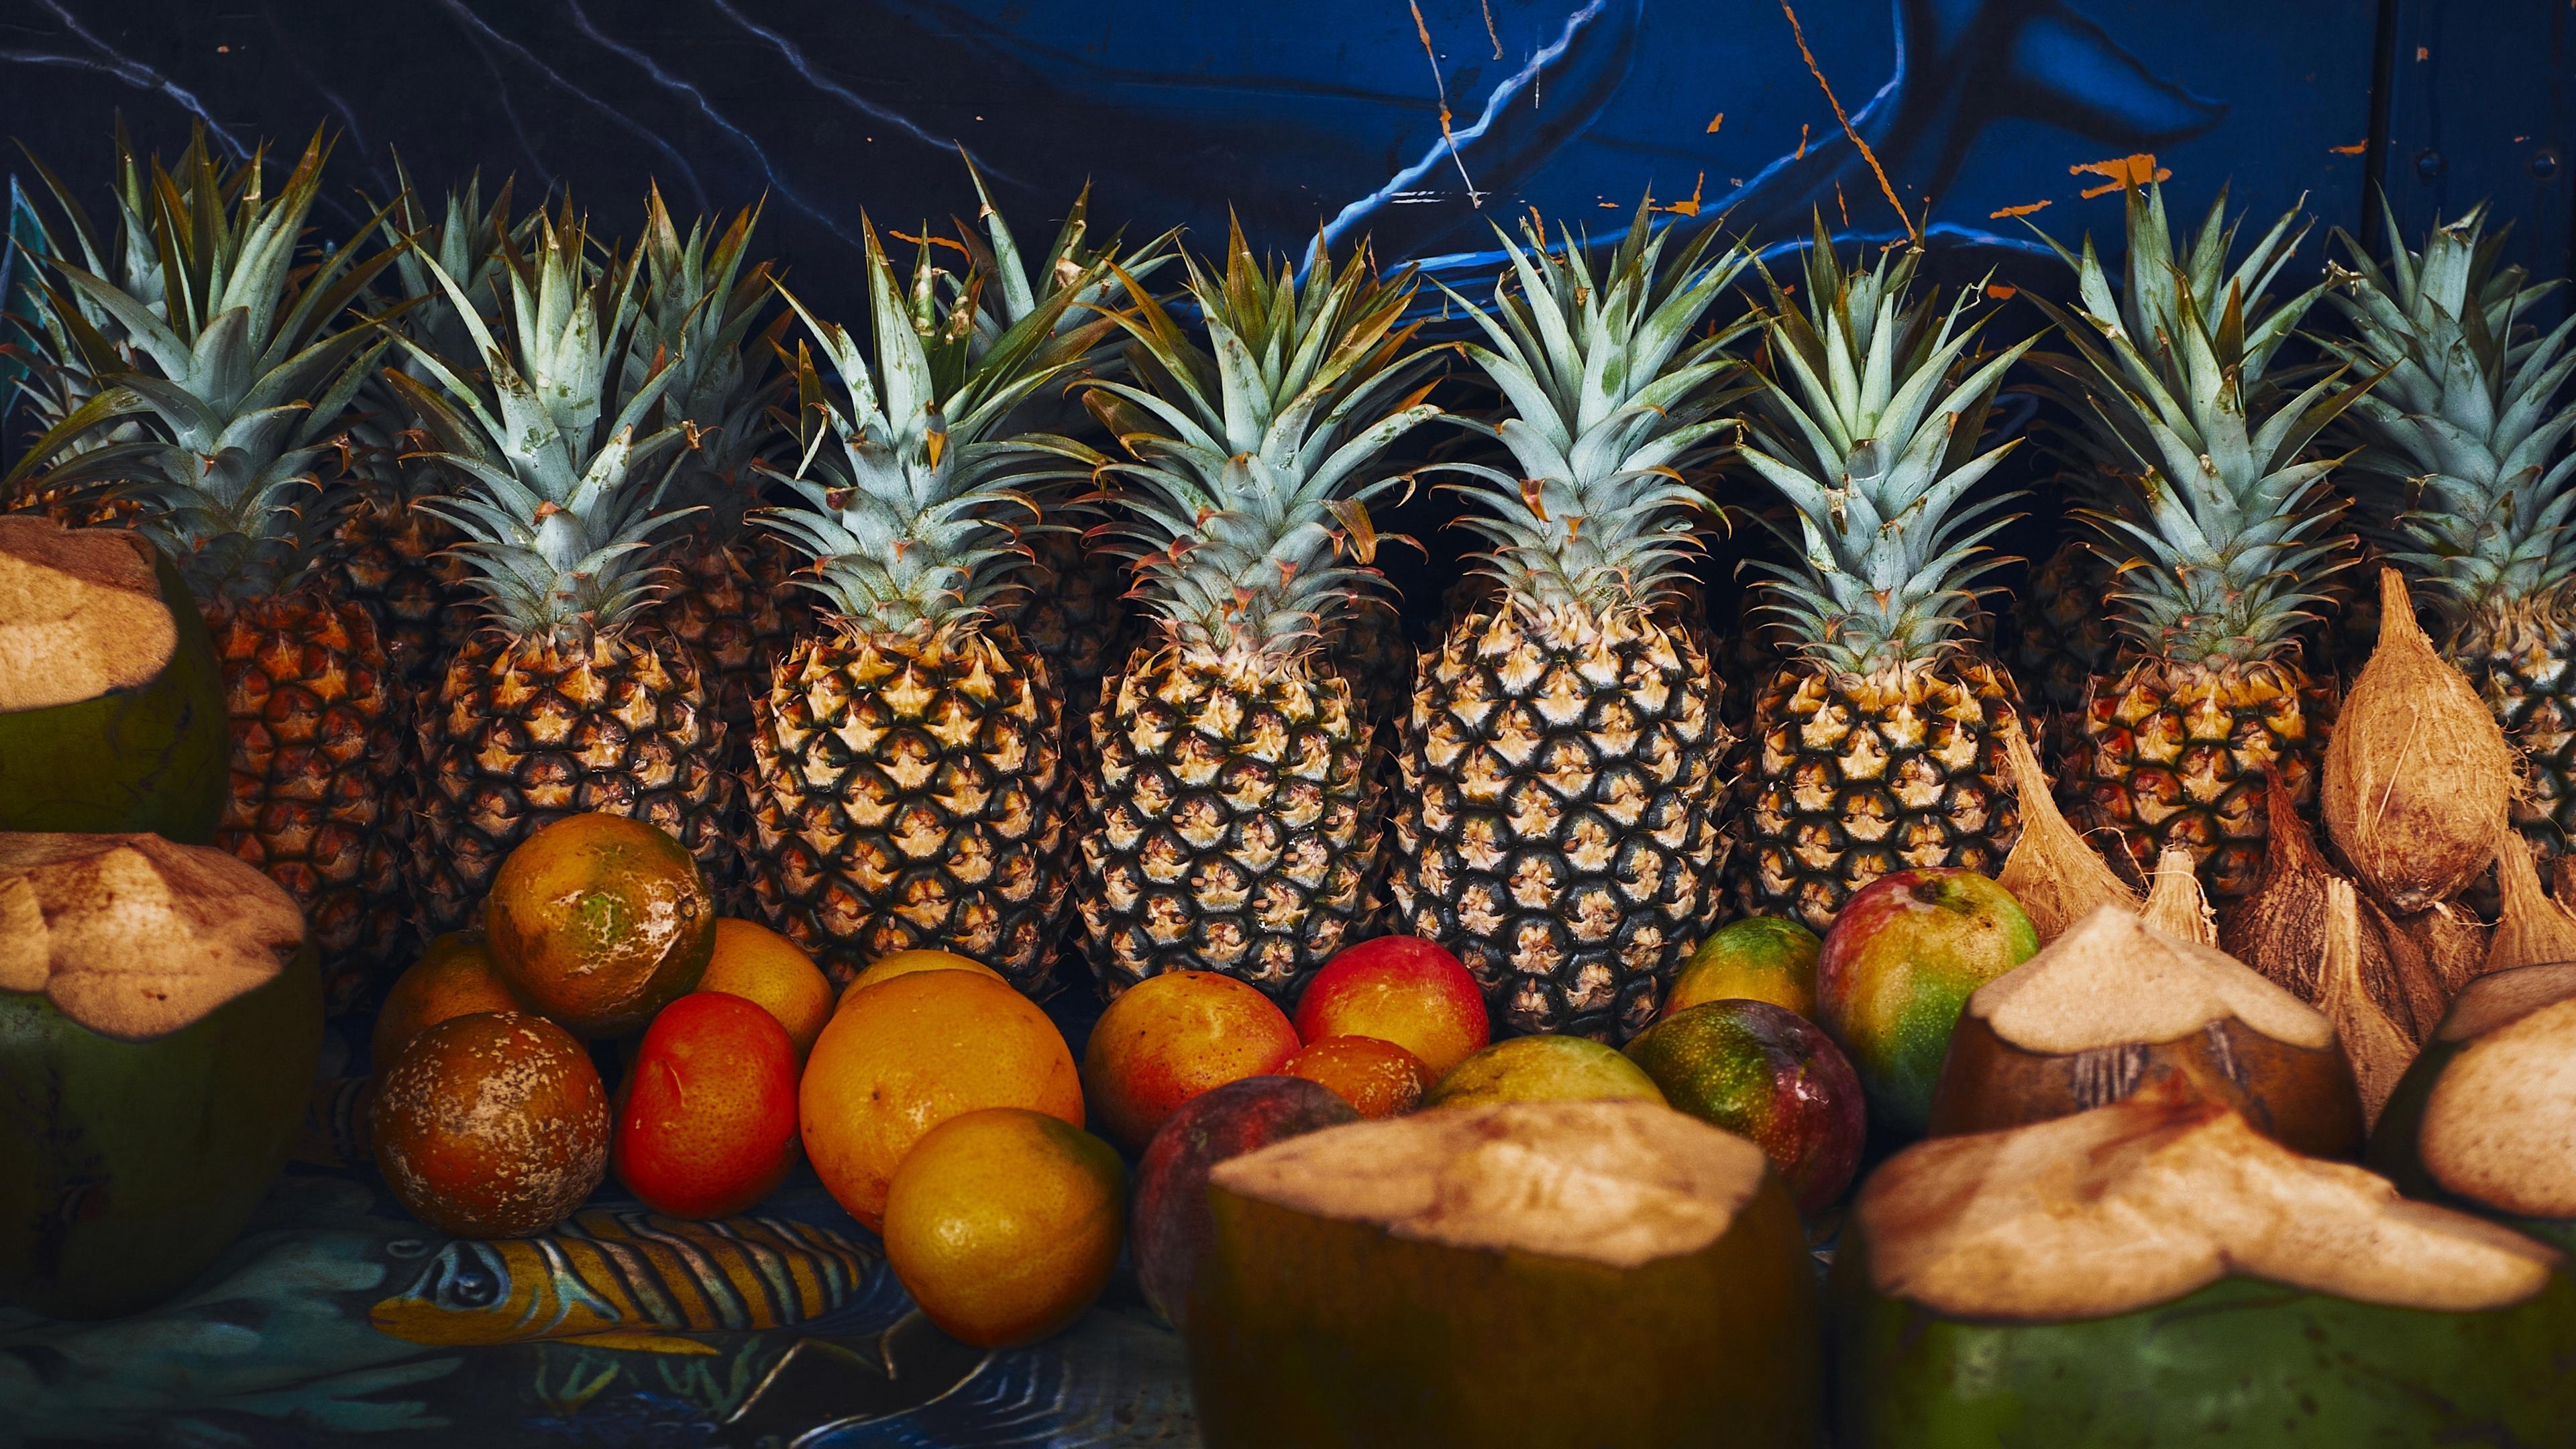 Download wallpaper 3840x2160 pineapple, fruit, coconuts 4k